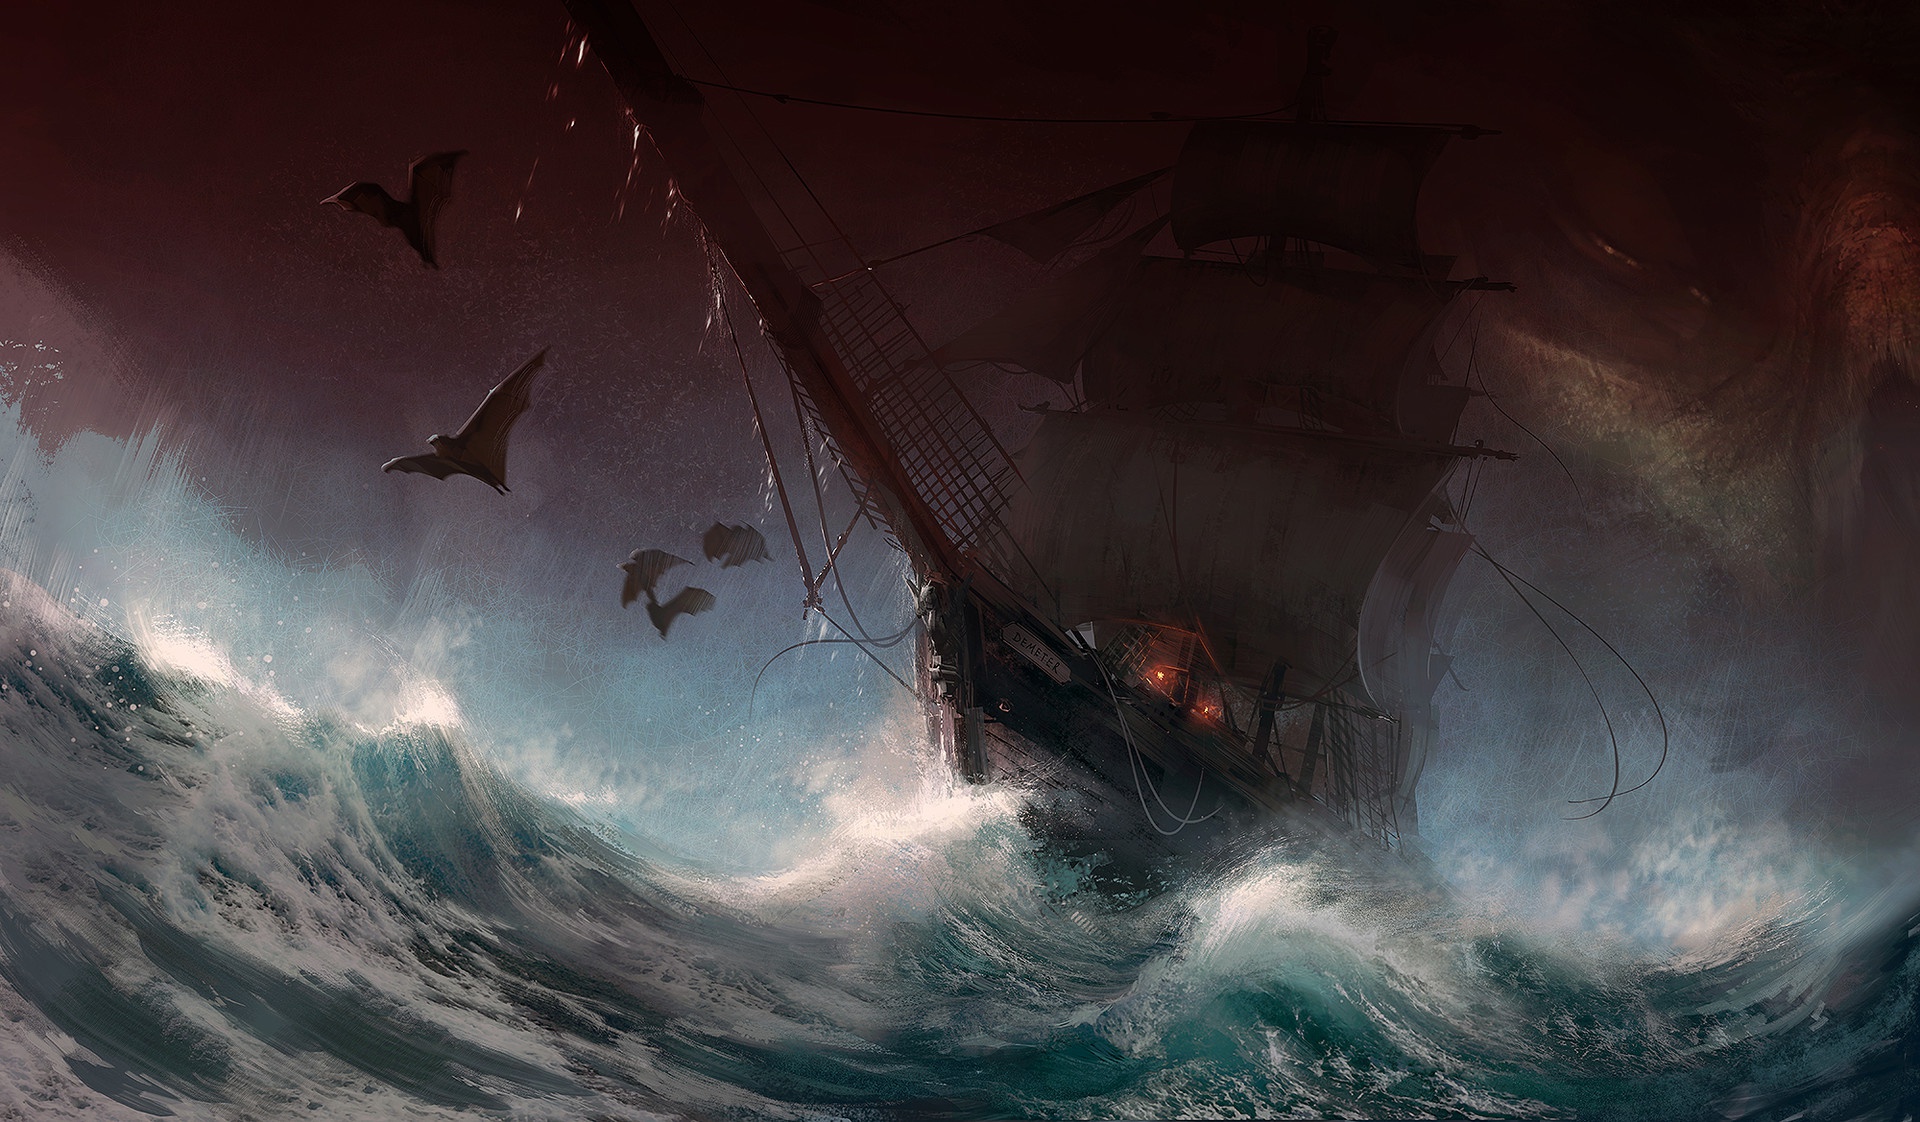 Last voyage of the Demeter by Joakim Ericsson